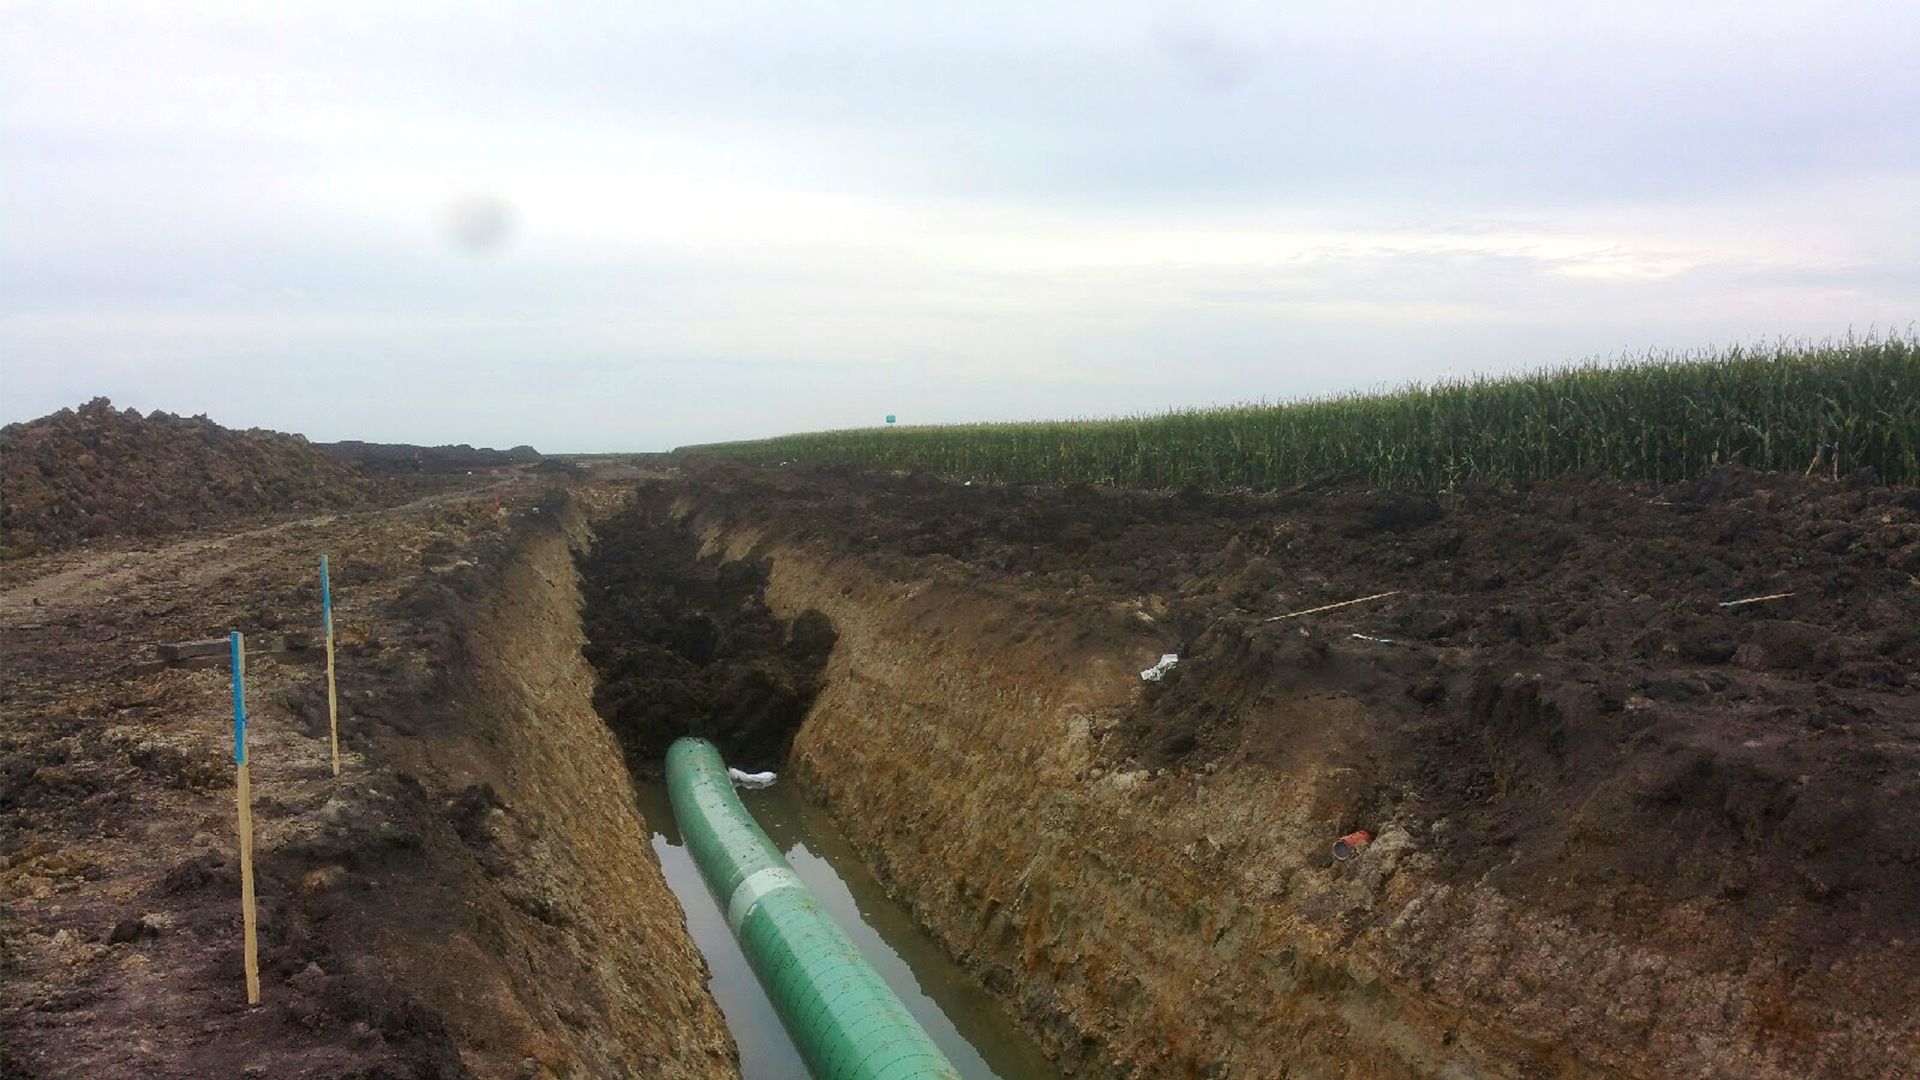 A photo of the Dakota Pipeline project through an Iowa field.